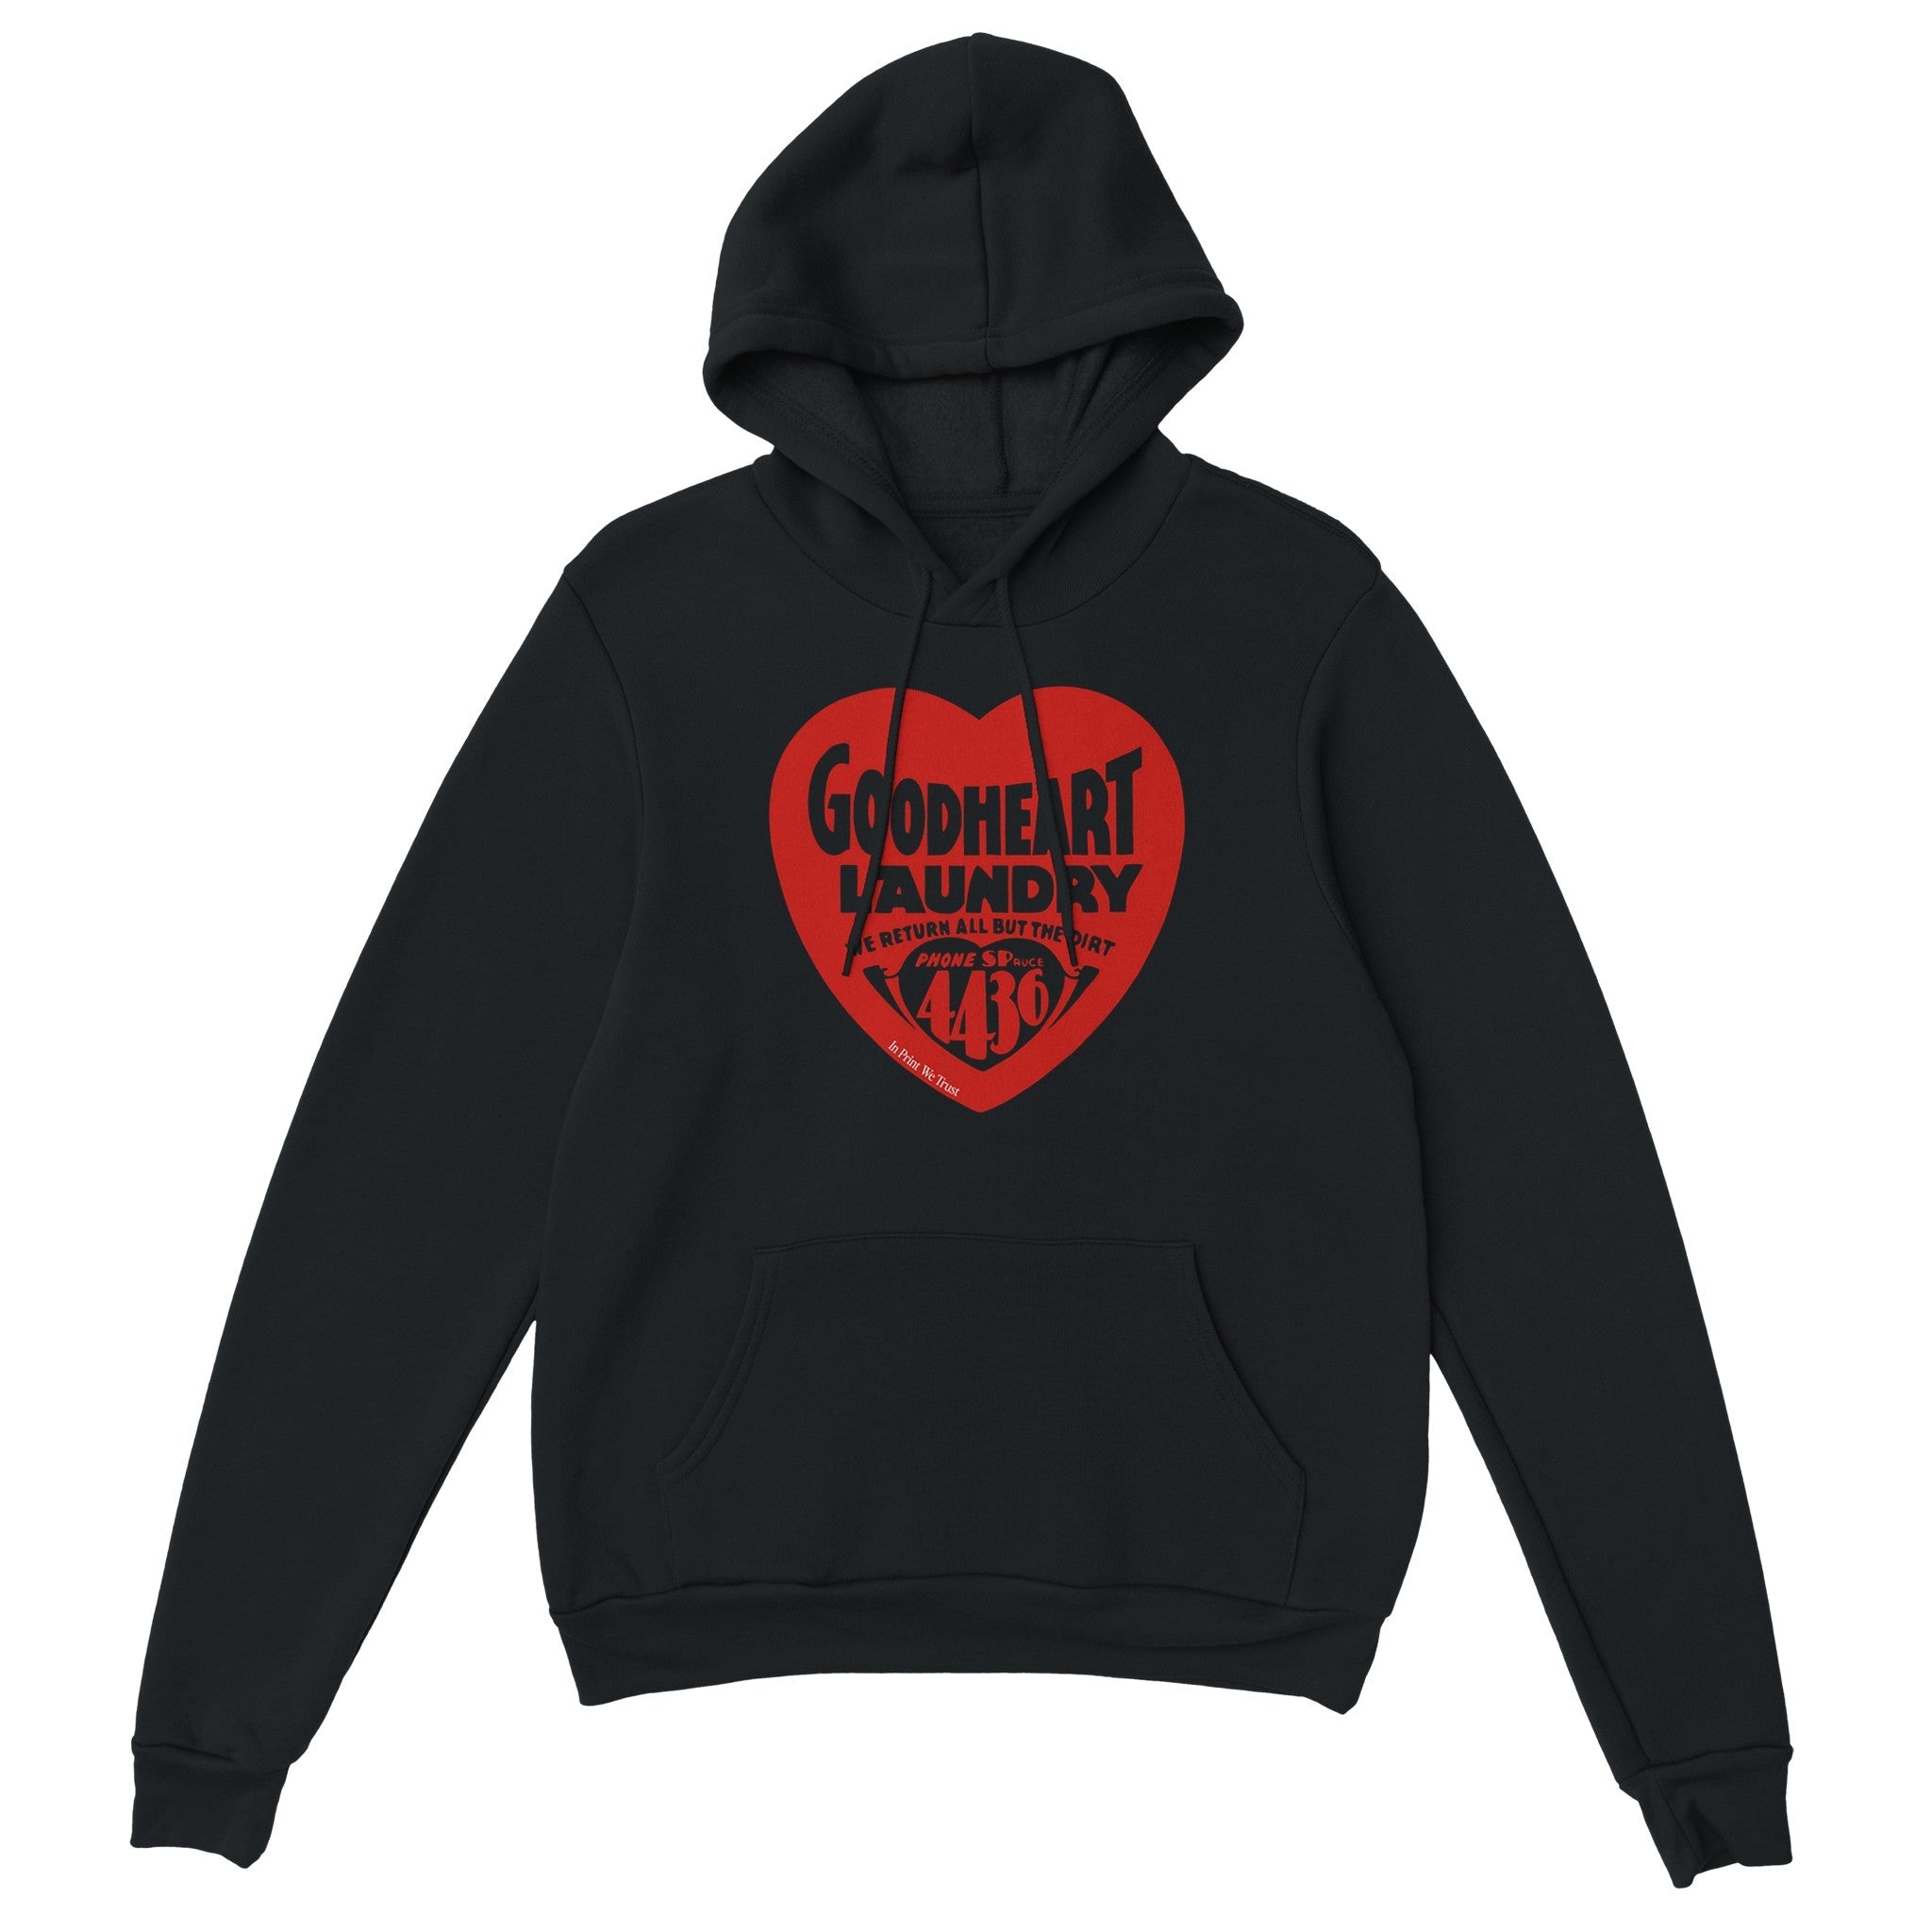 'Goodheart Laundry' hoodie - In Print We Trust